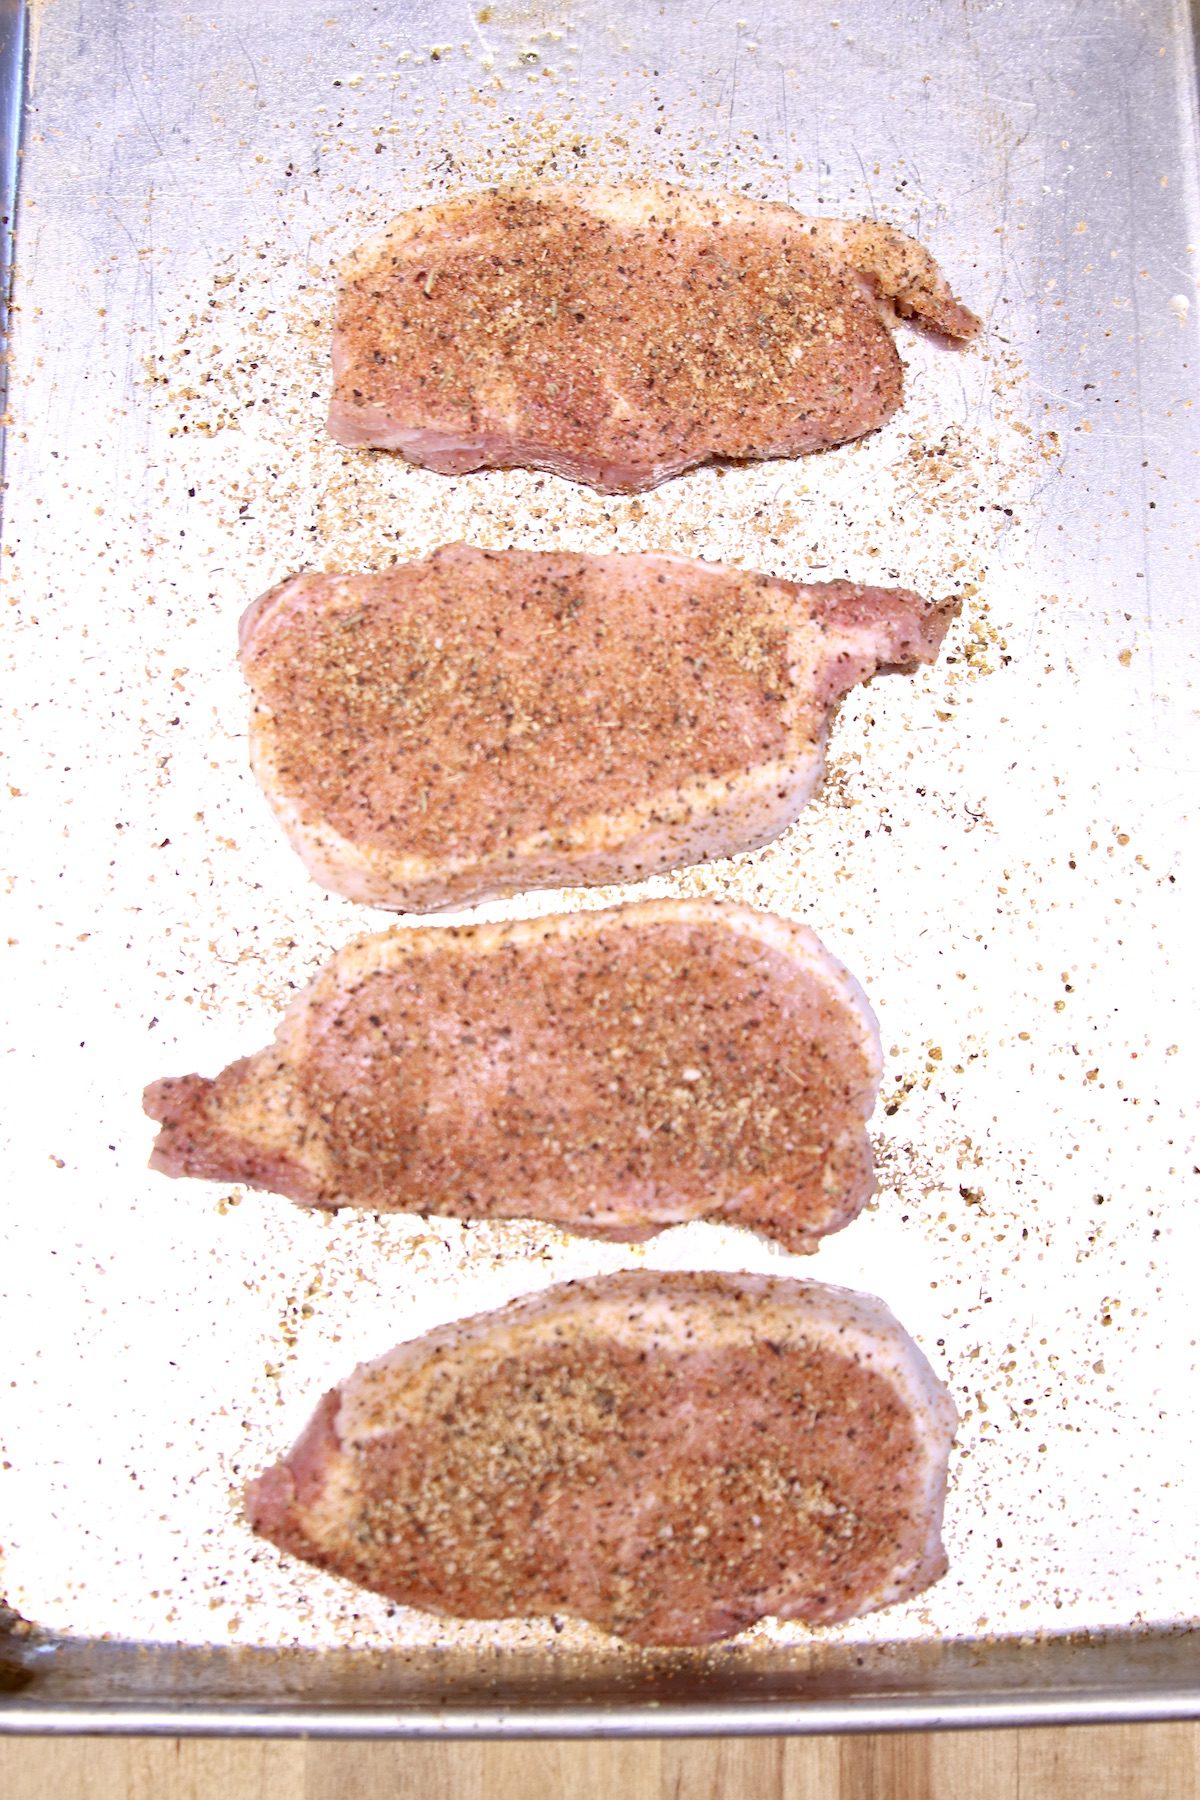 sheet pan with 4 seasoned pork chops - raw